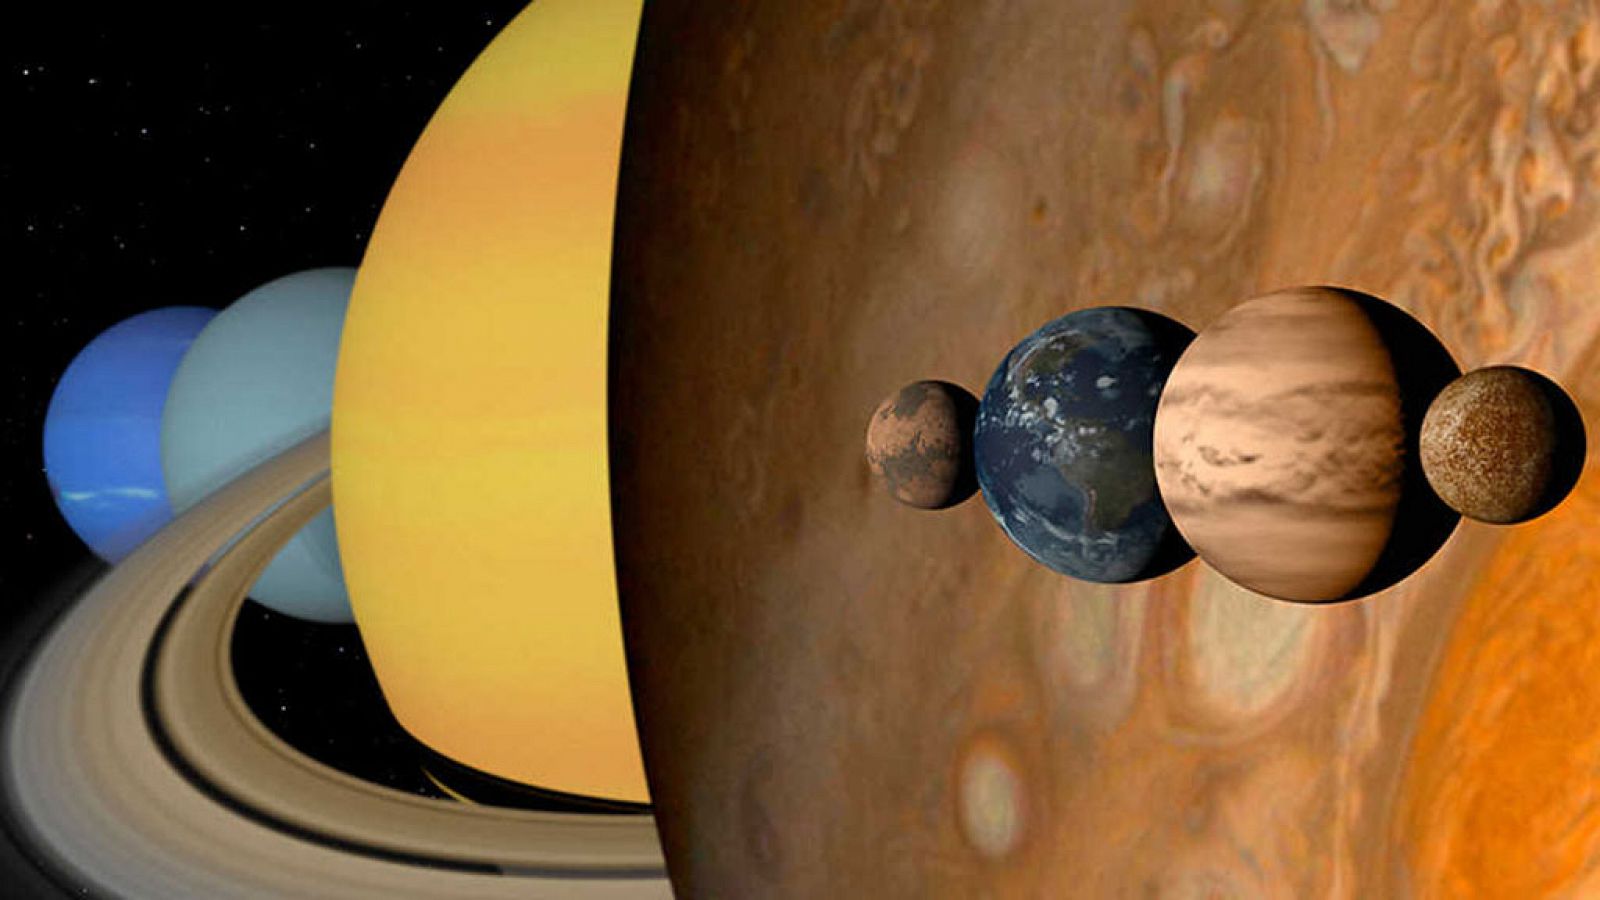 Planetas del sistema solar - Toda Materia